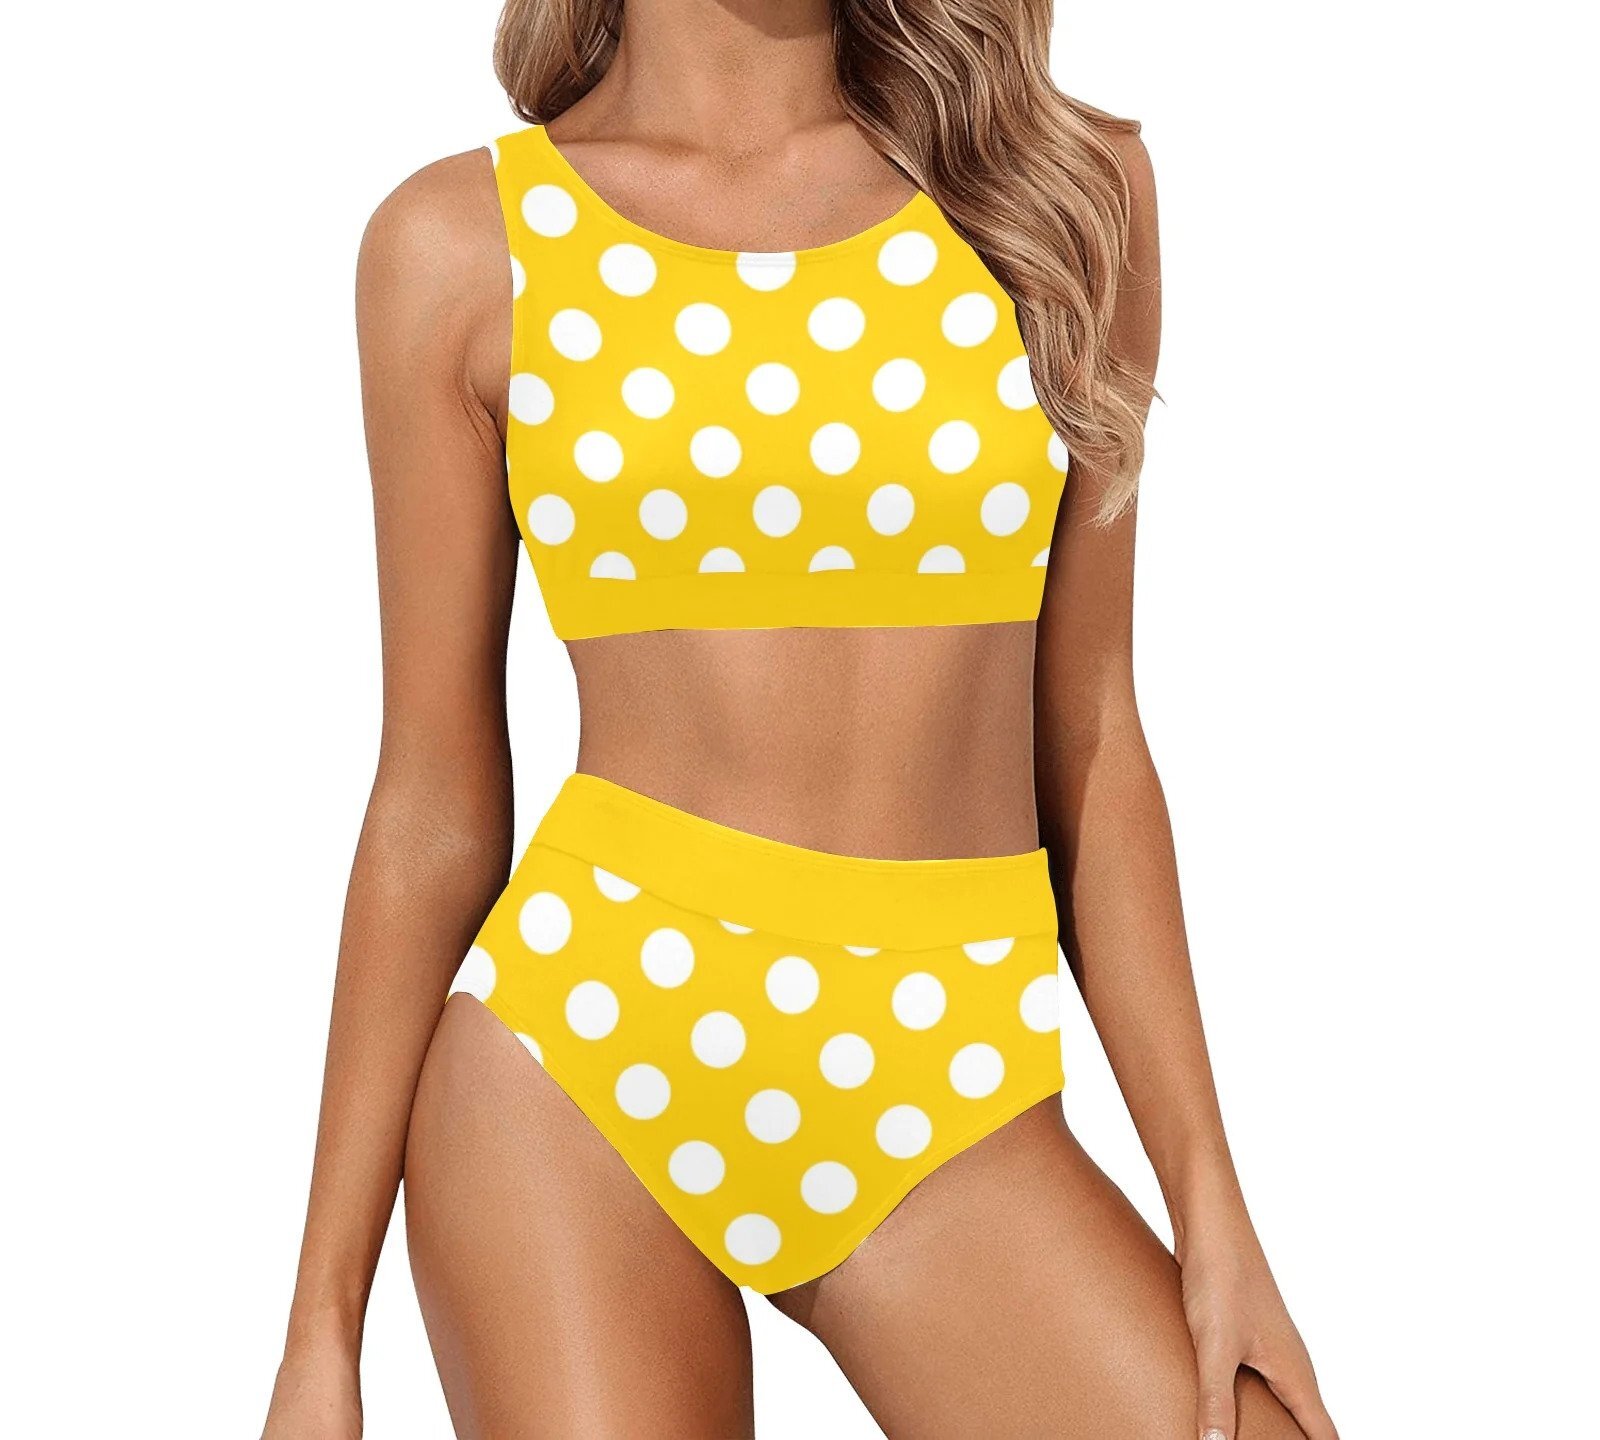 Where Can I Buy A Yellow Polka Dot Bikini